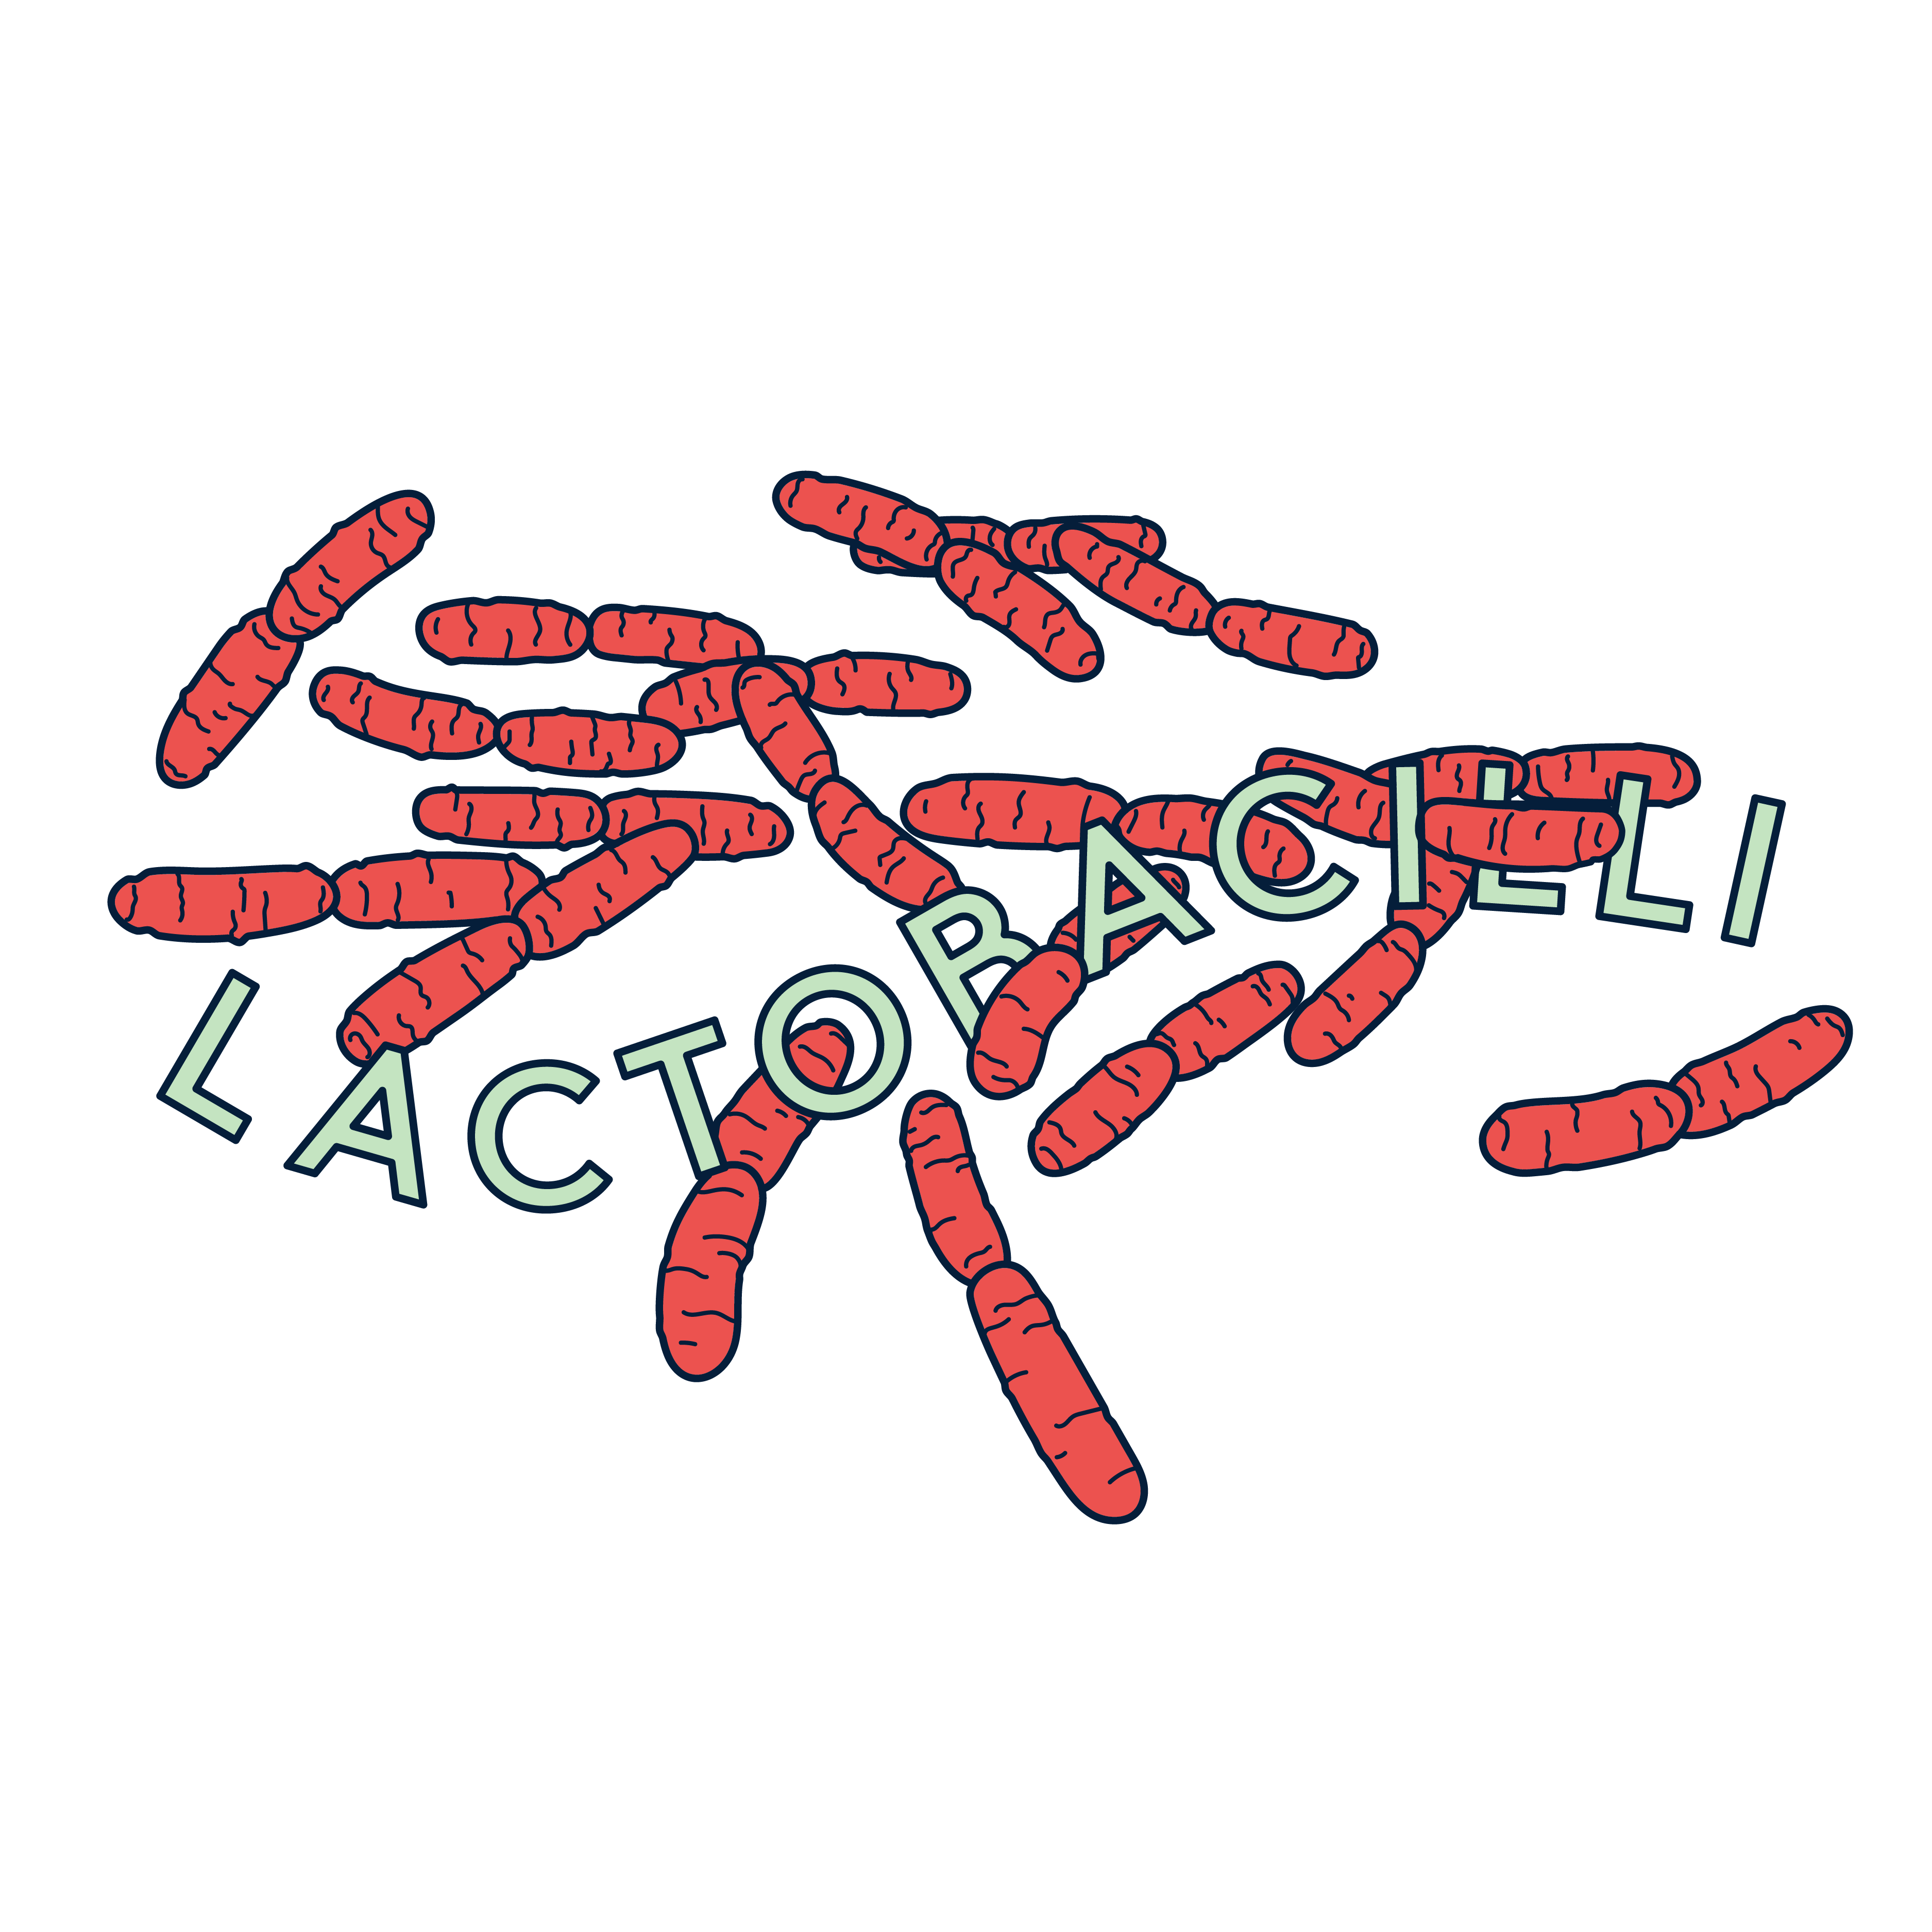 Lactobacillus vaginal health